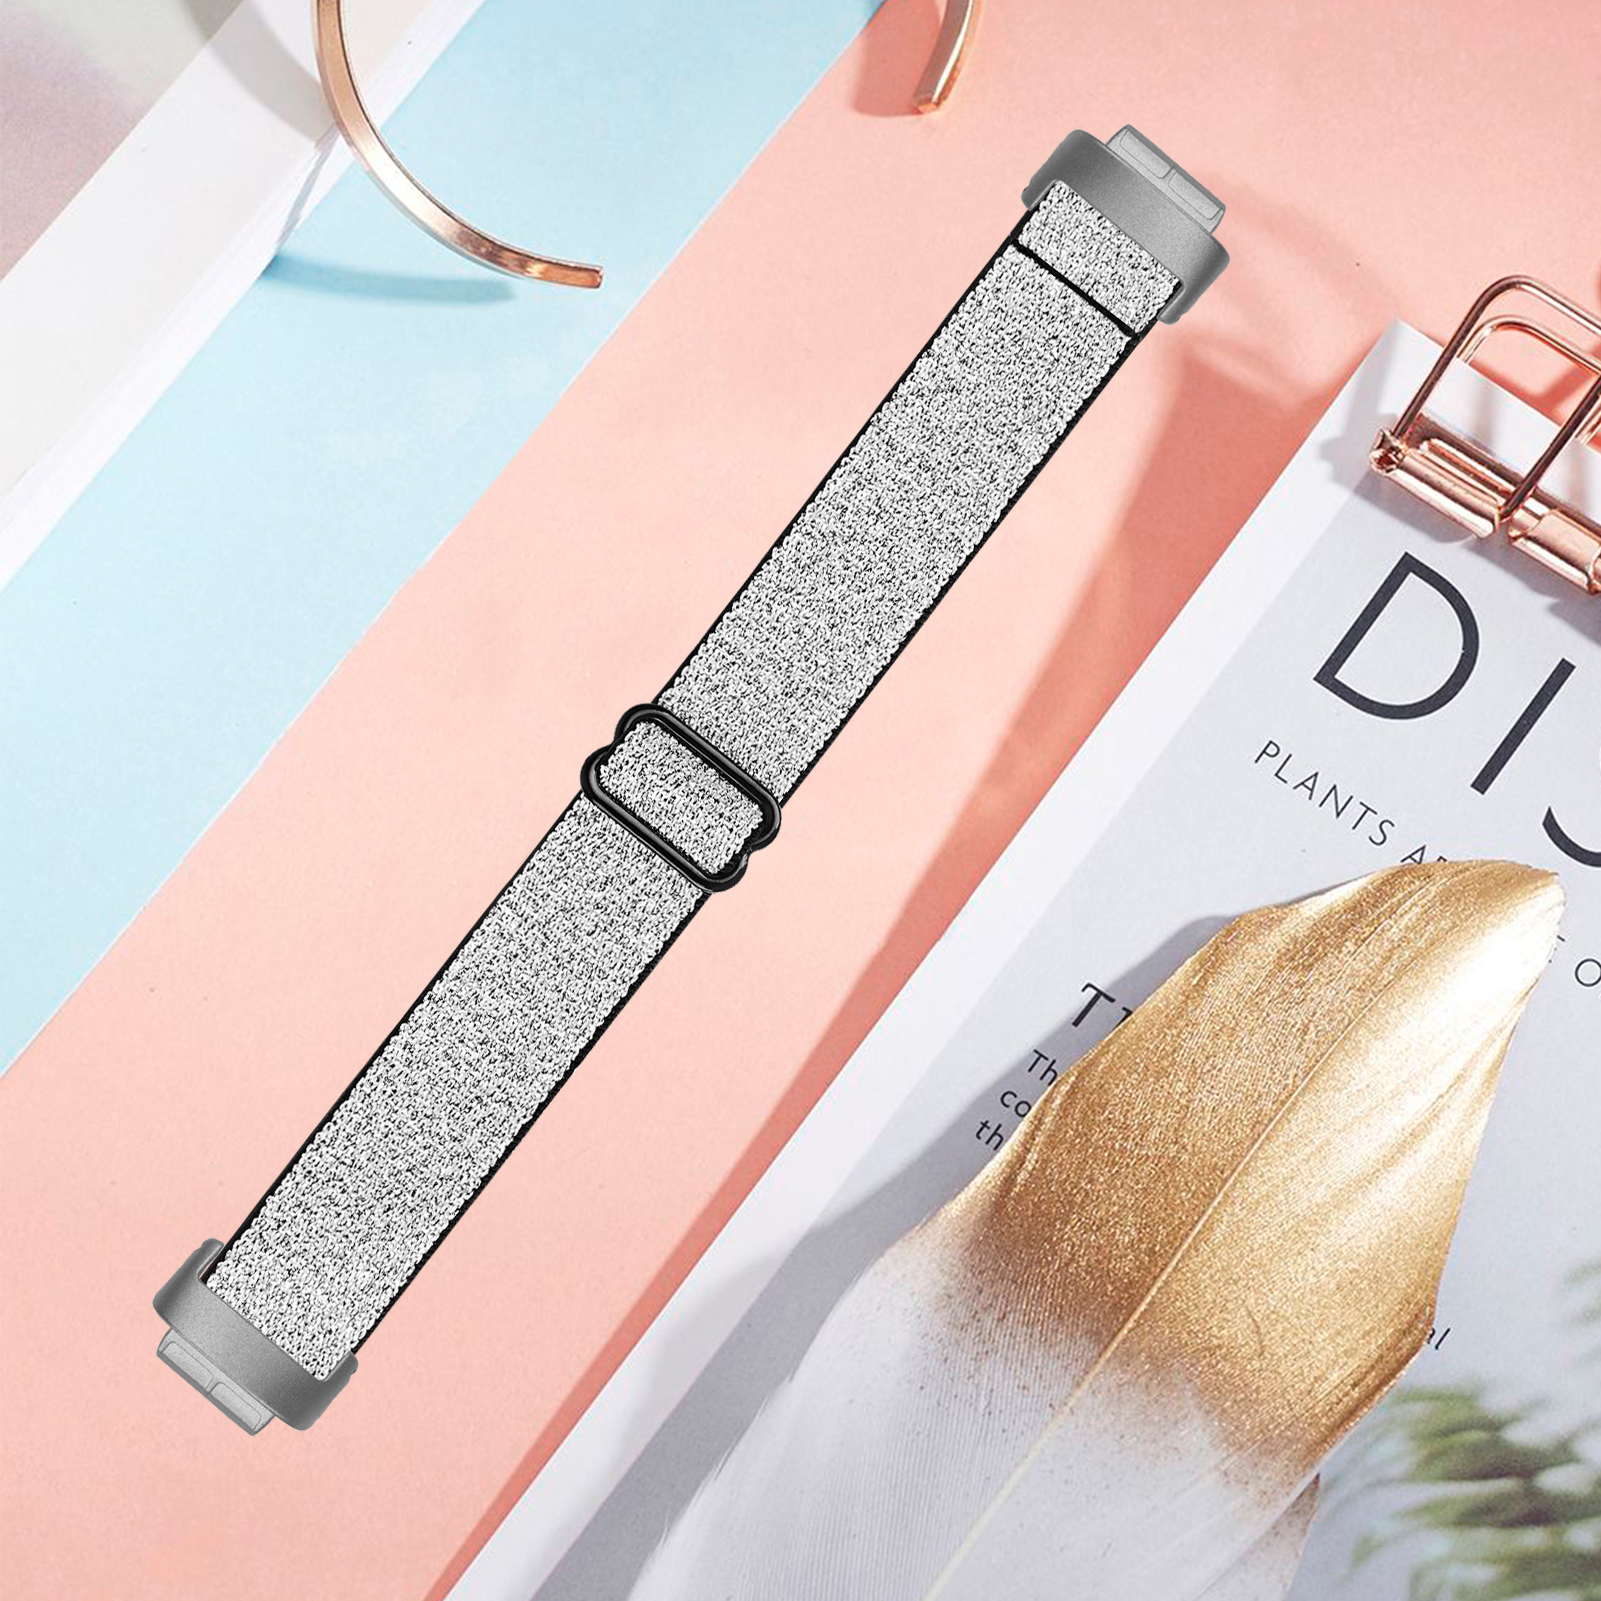 Ersatzarmband, Silber Nylon, aus Fitbit, inspire3, INF Uhrenarmband